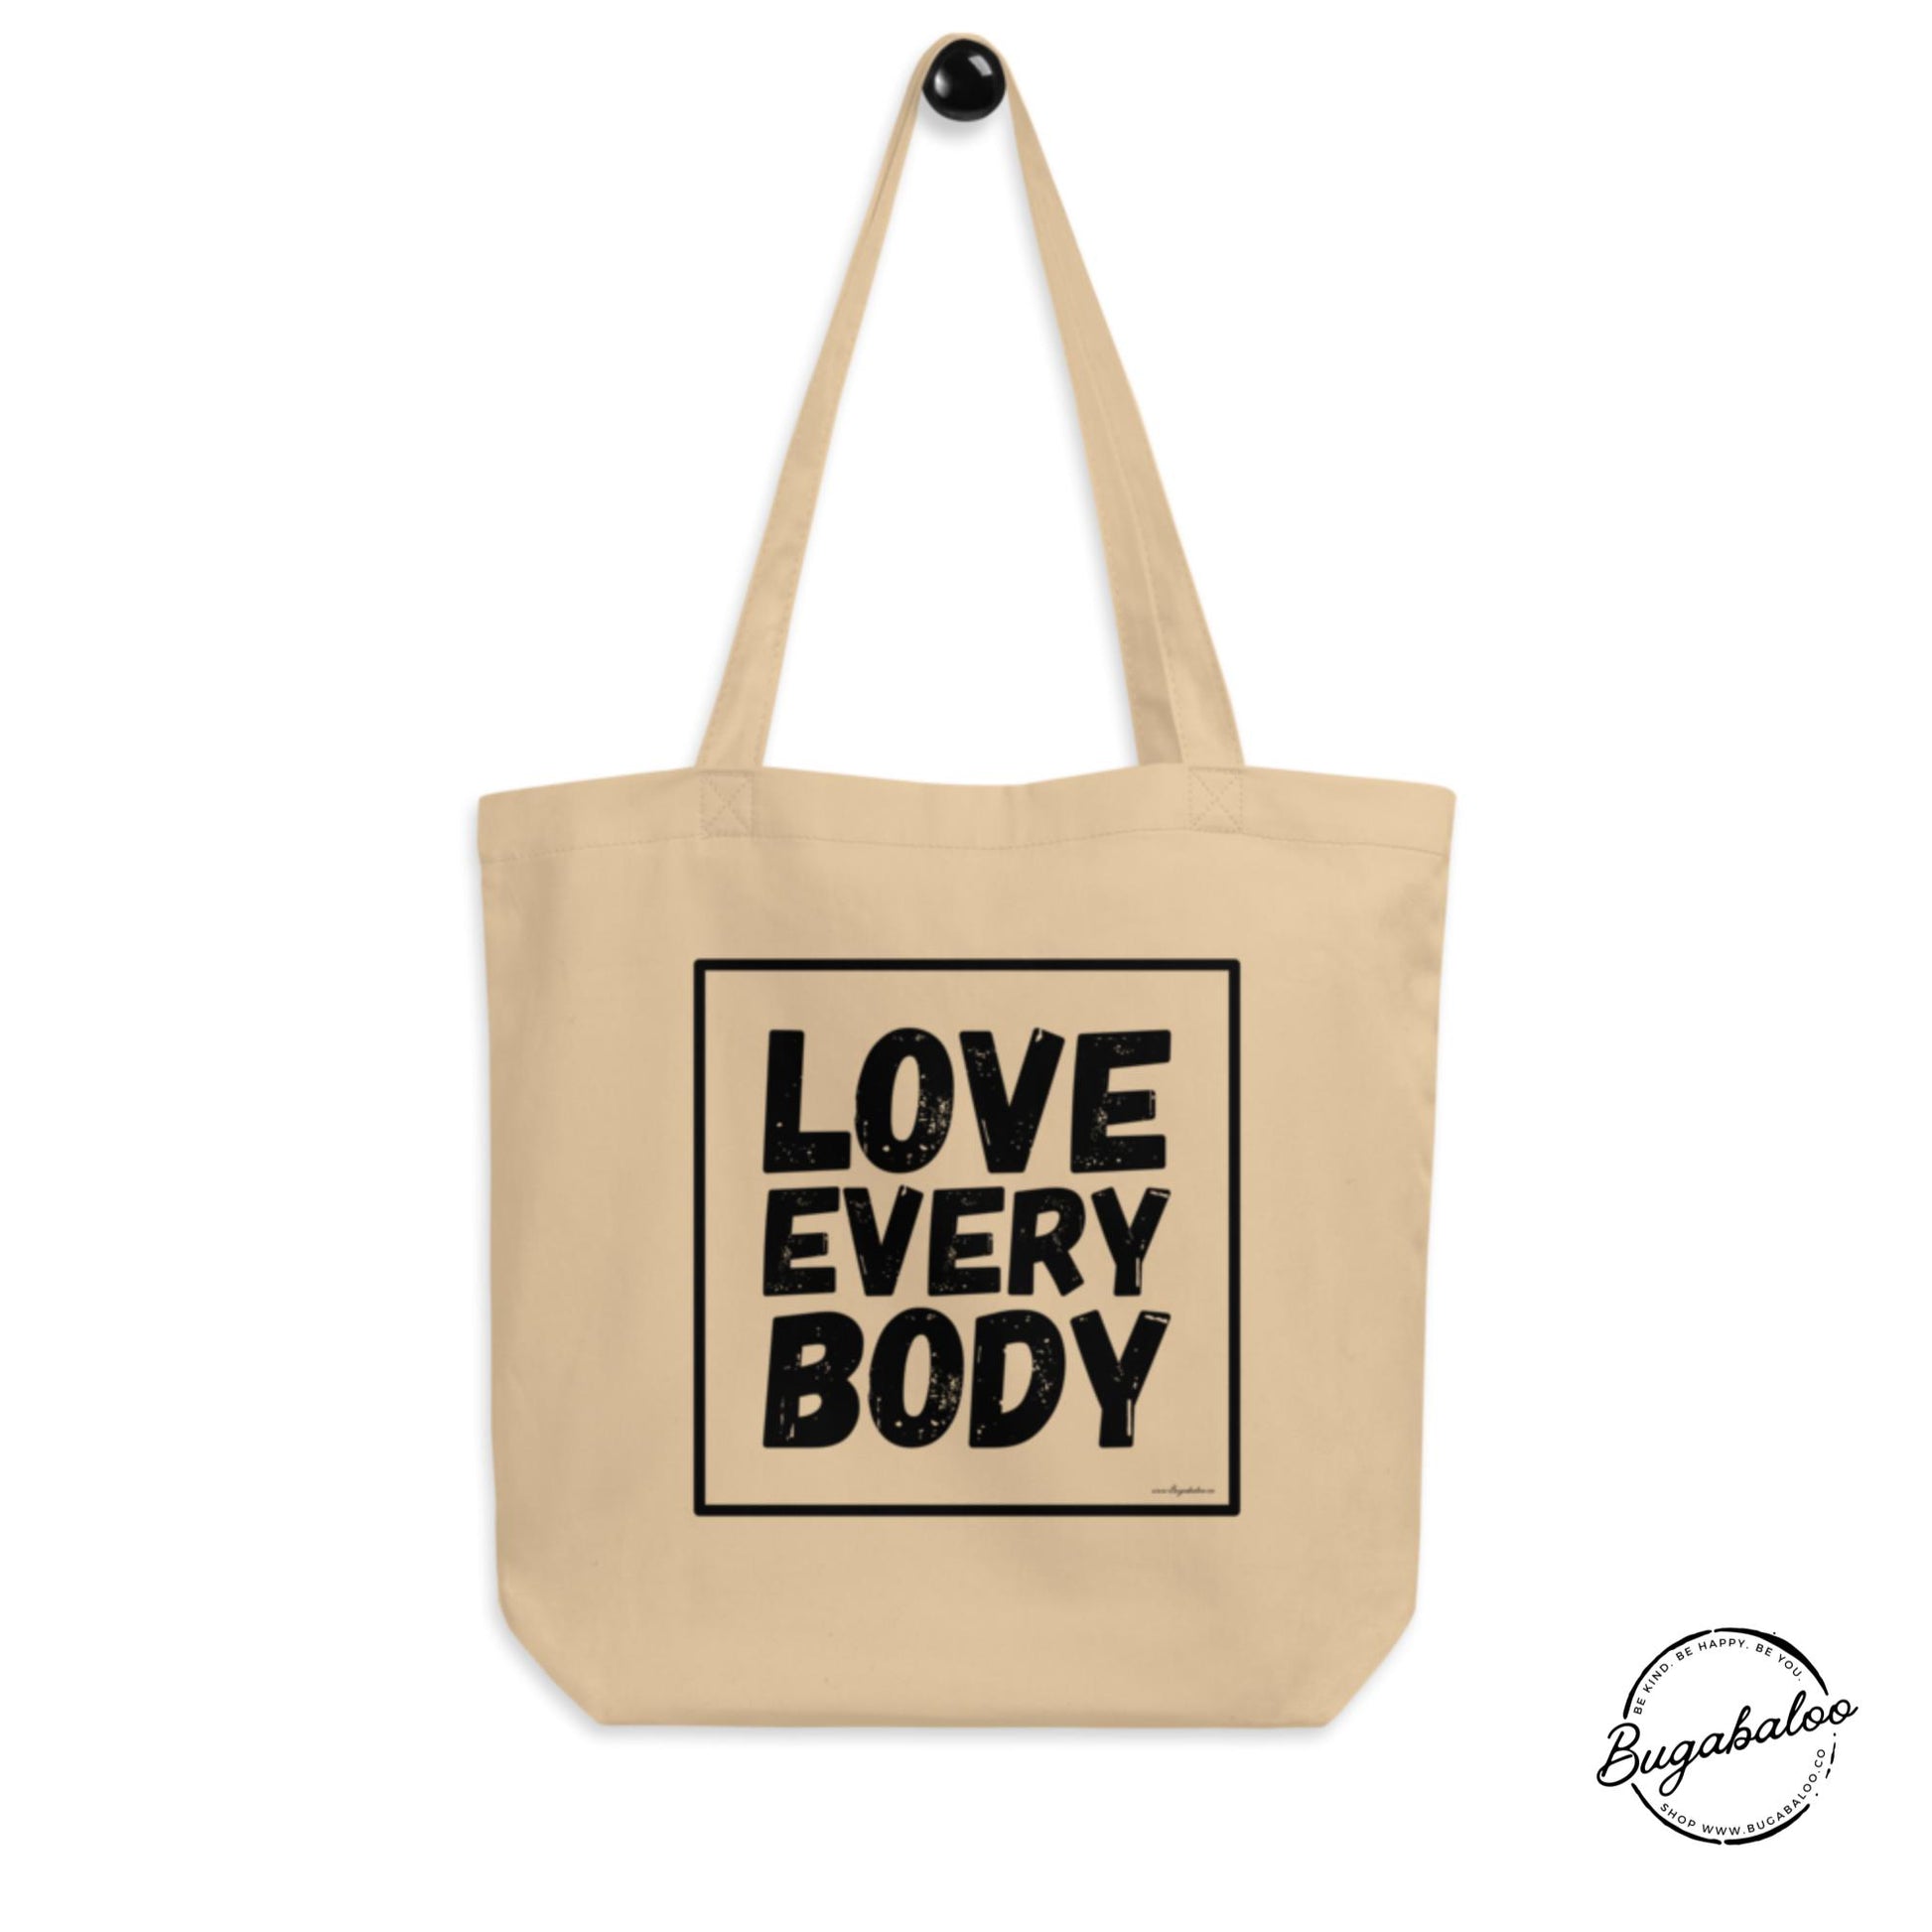 Love Every Body Eco Friendly Tote Bag by Bugabaloo, Inc.